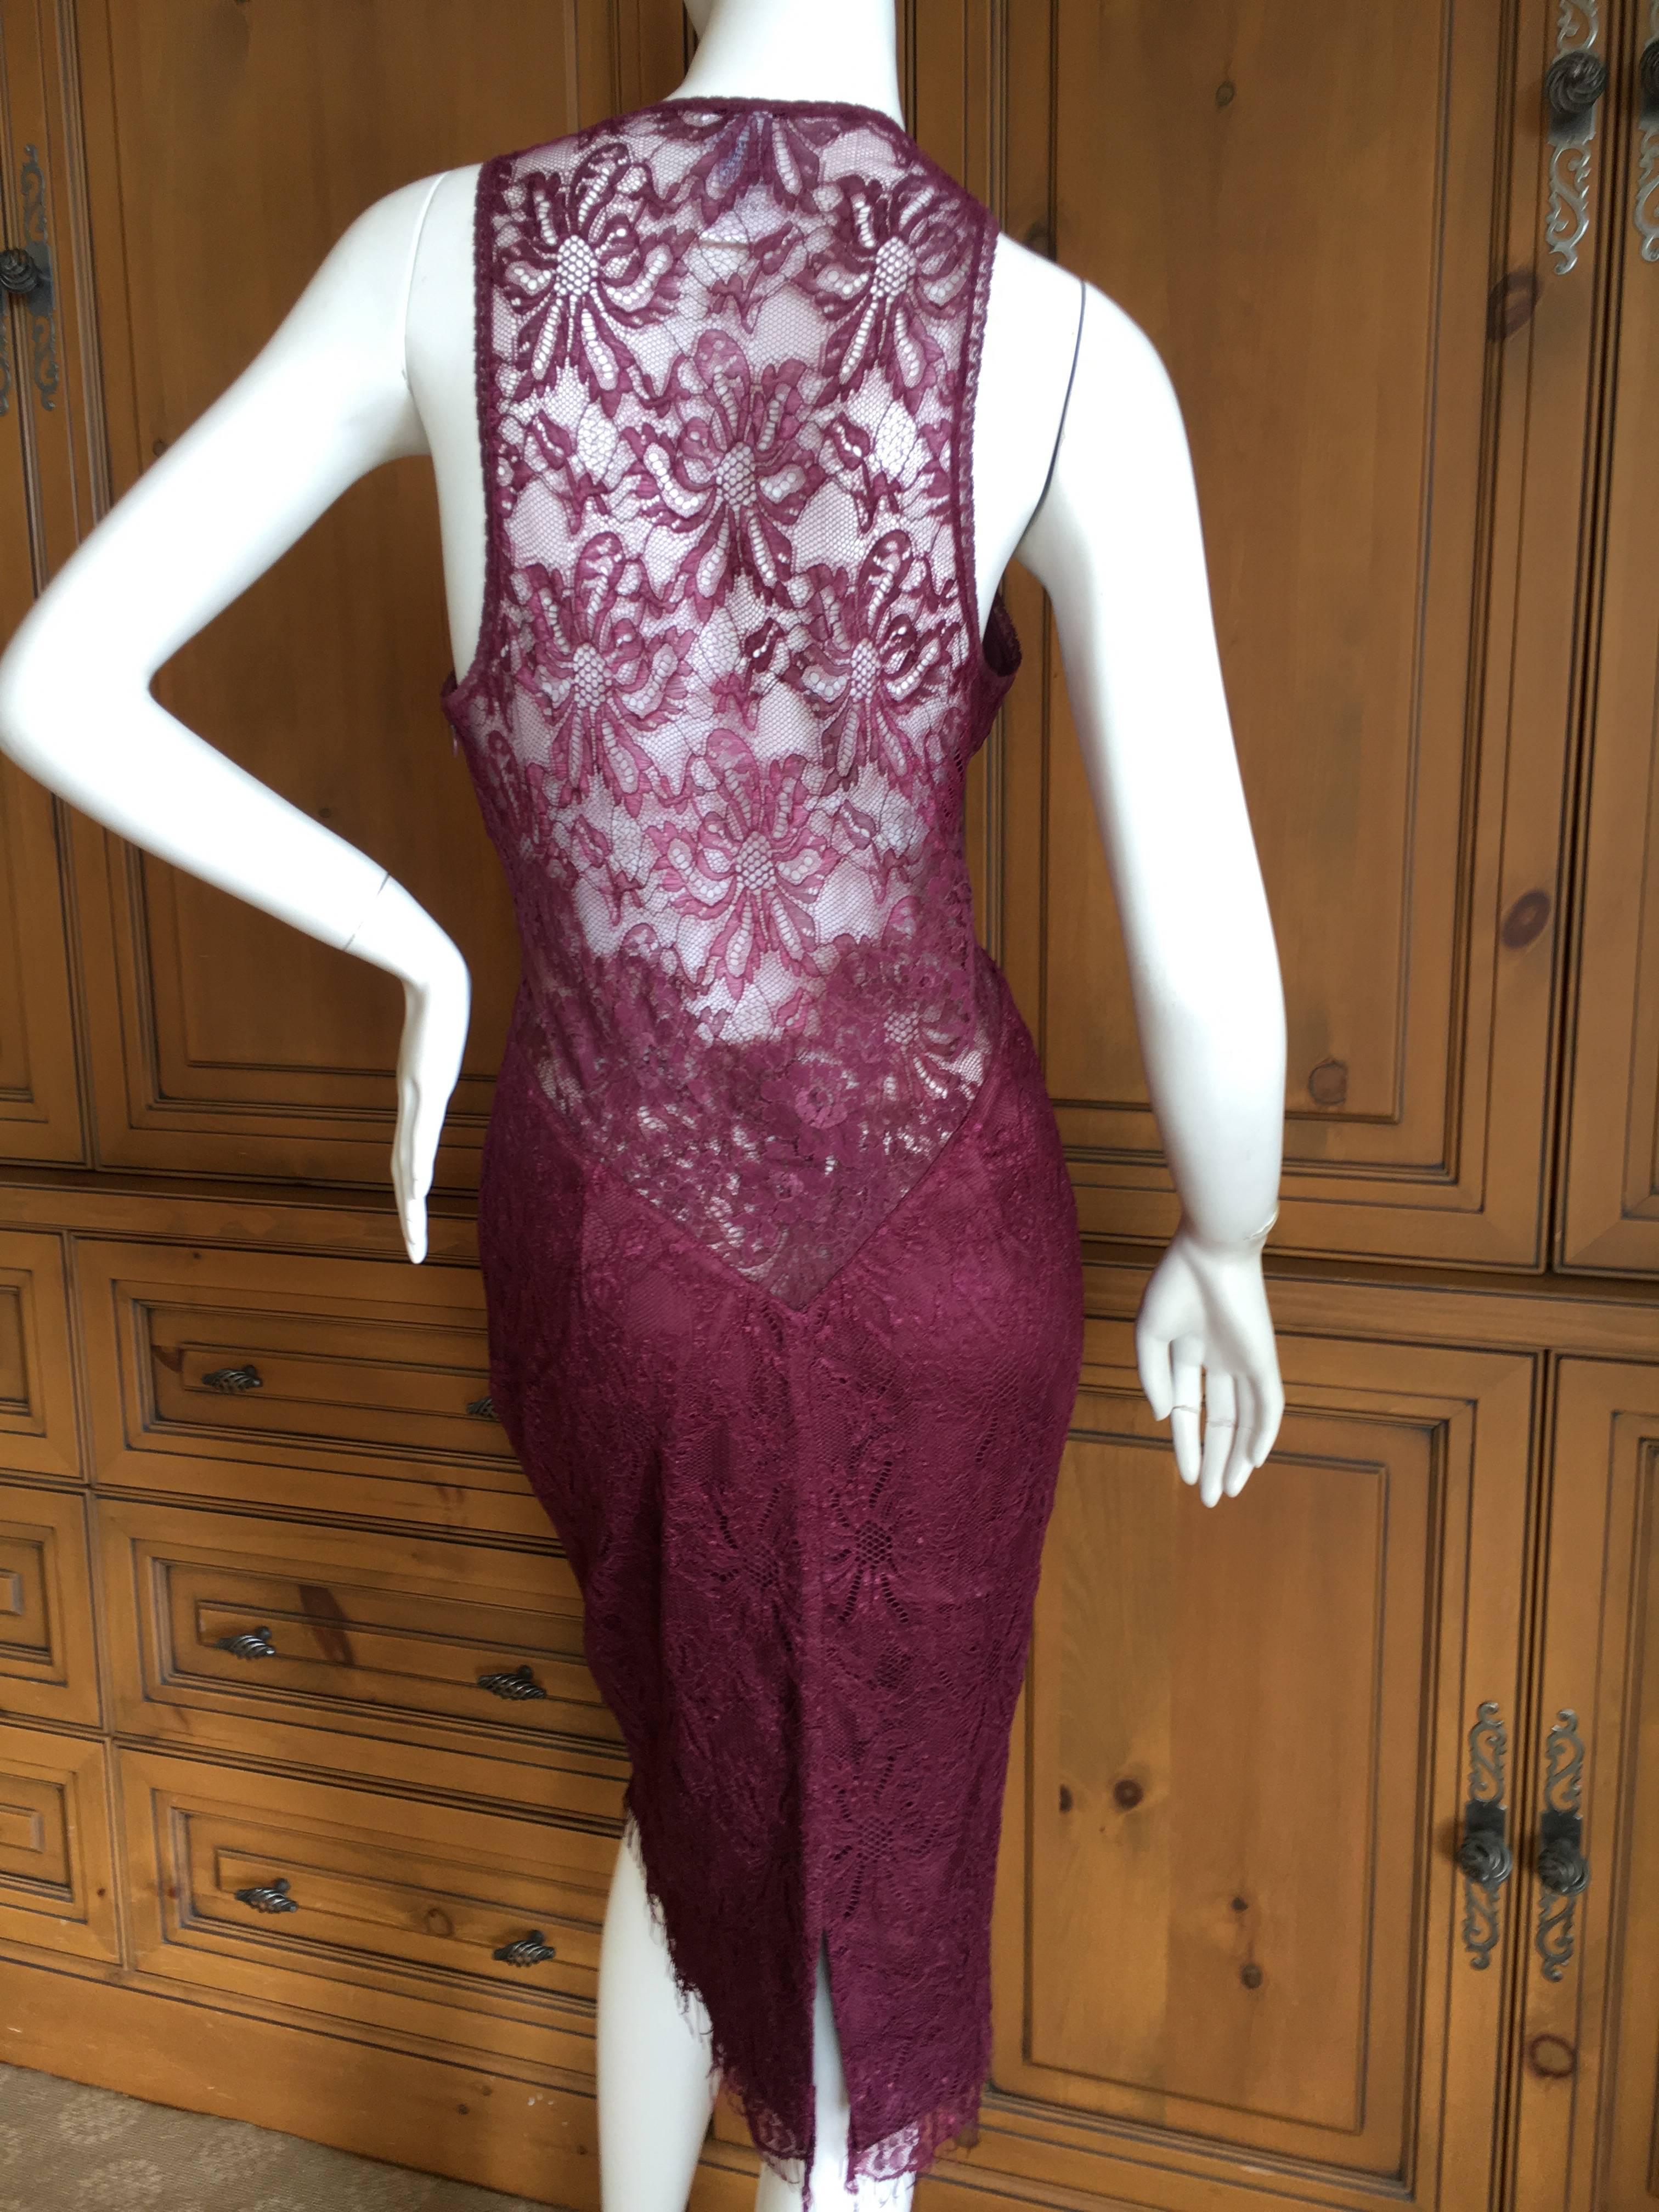  D&G Dolce & Gabbana Vintage Lace Overlay Sheer Cocktail Dress For Sale 1